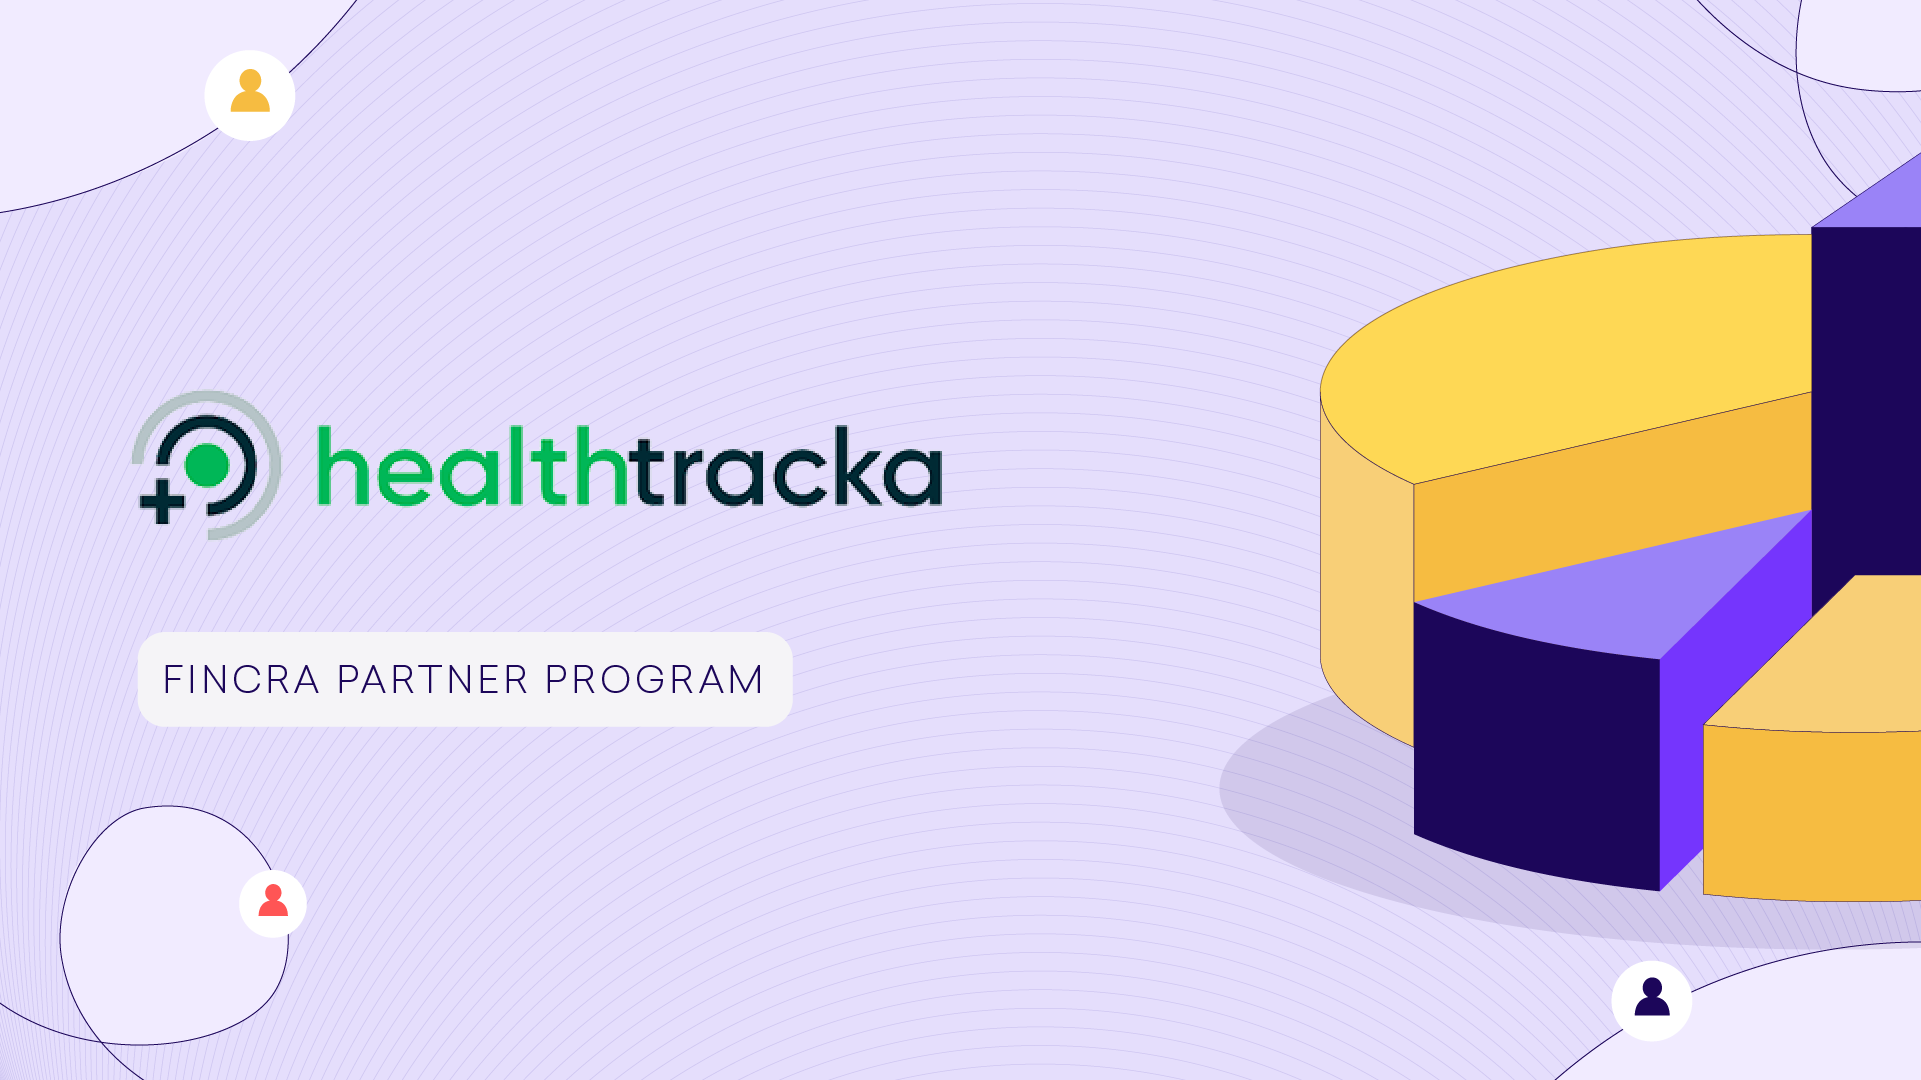 Fincra Partner Program with Healthtracka